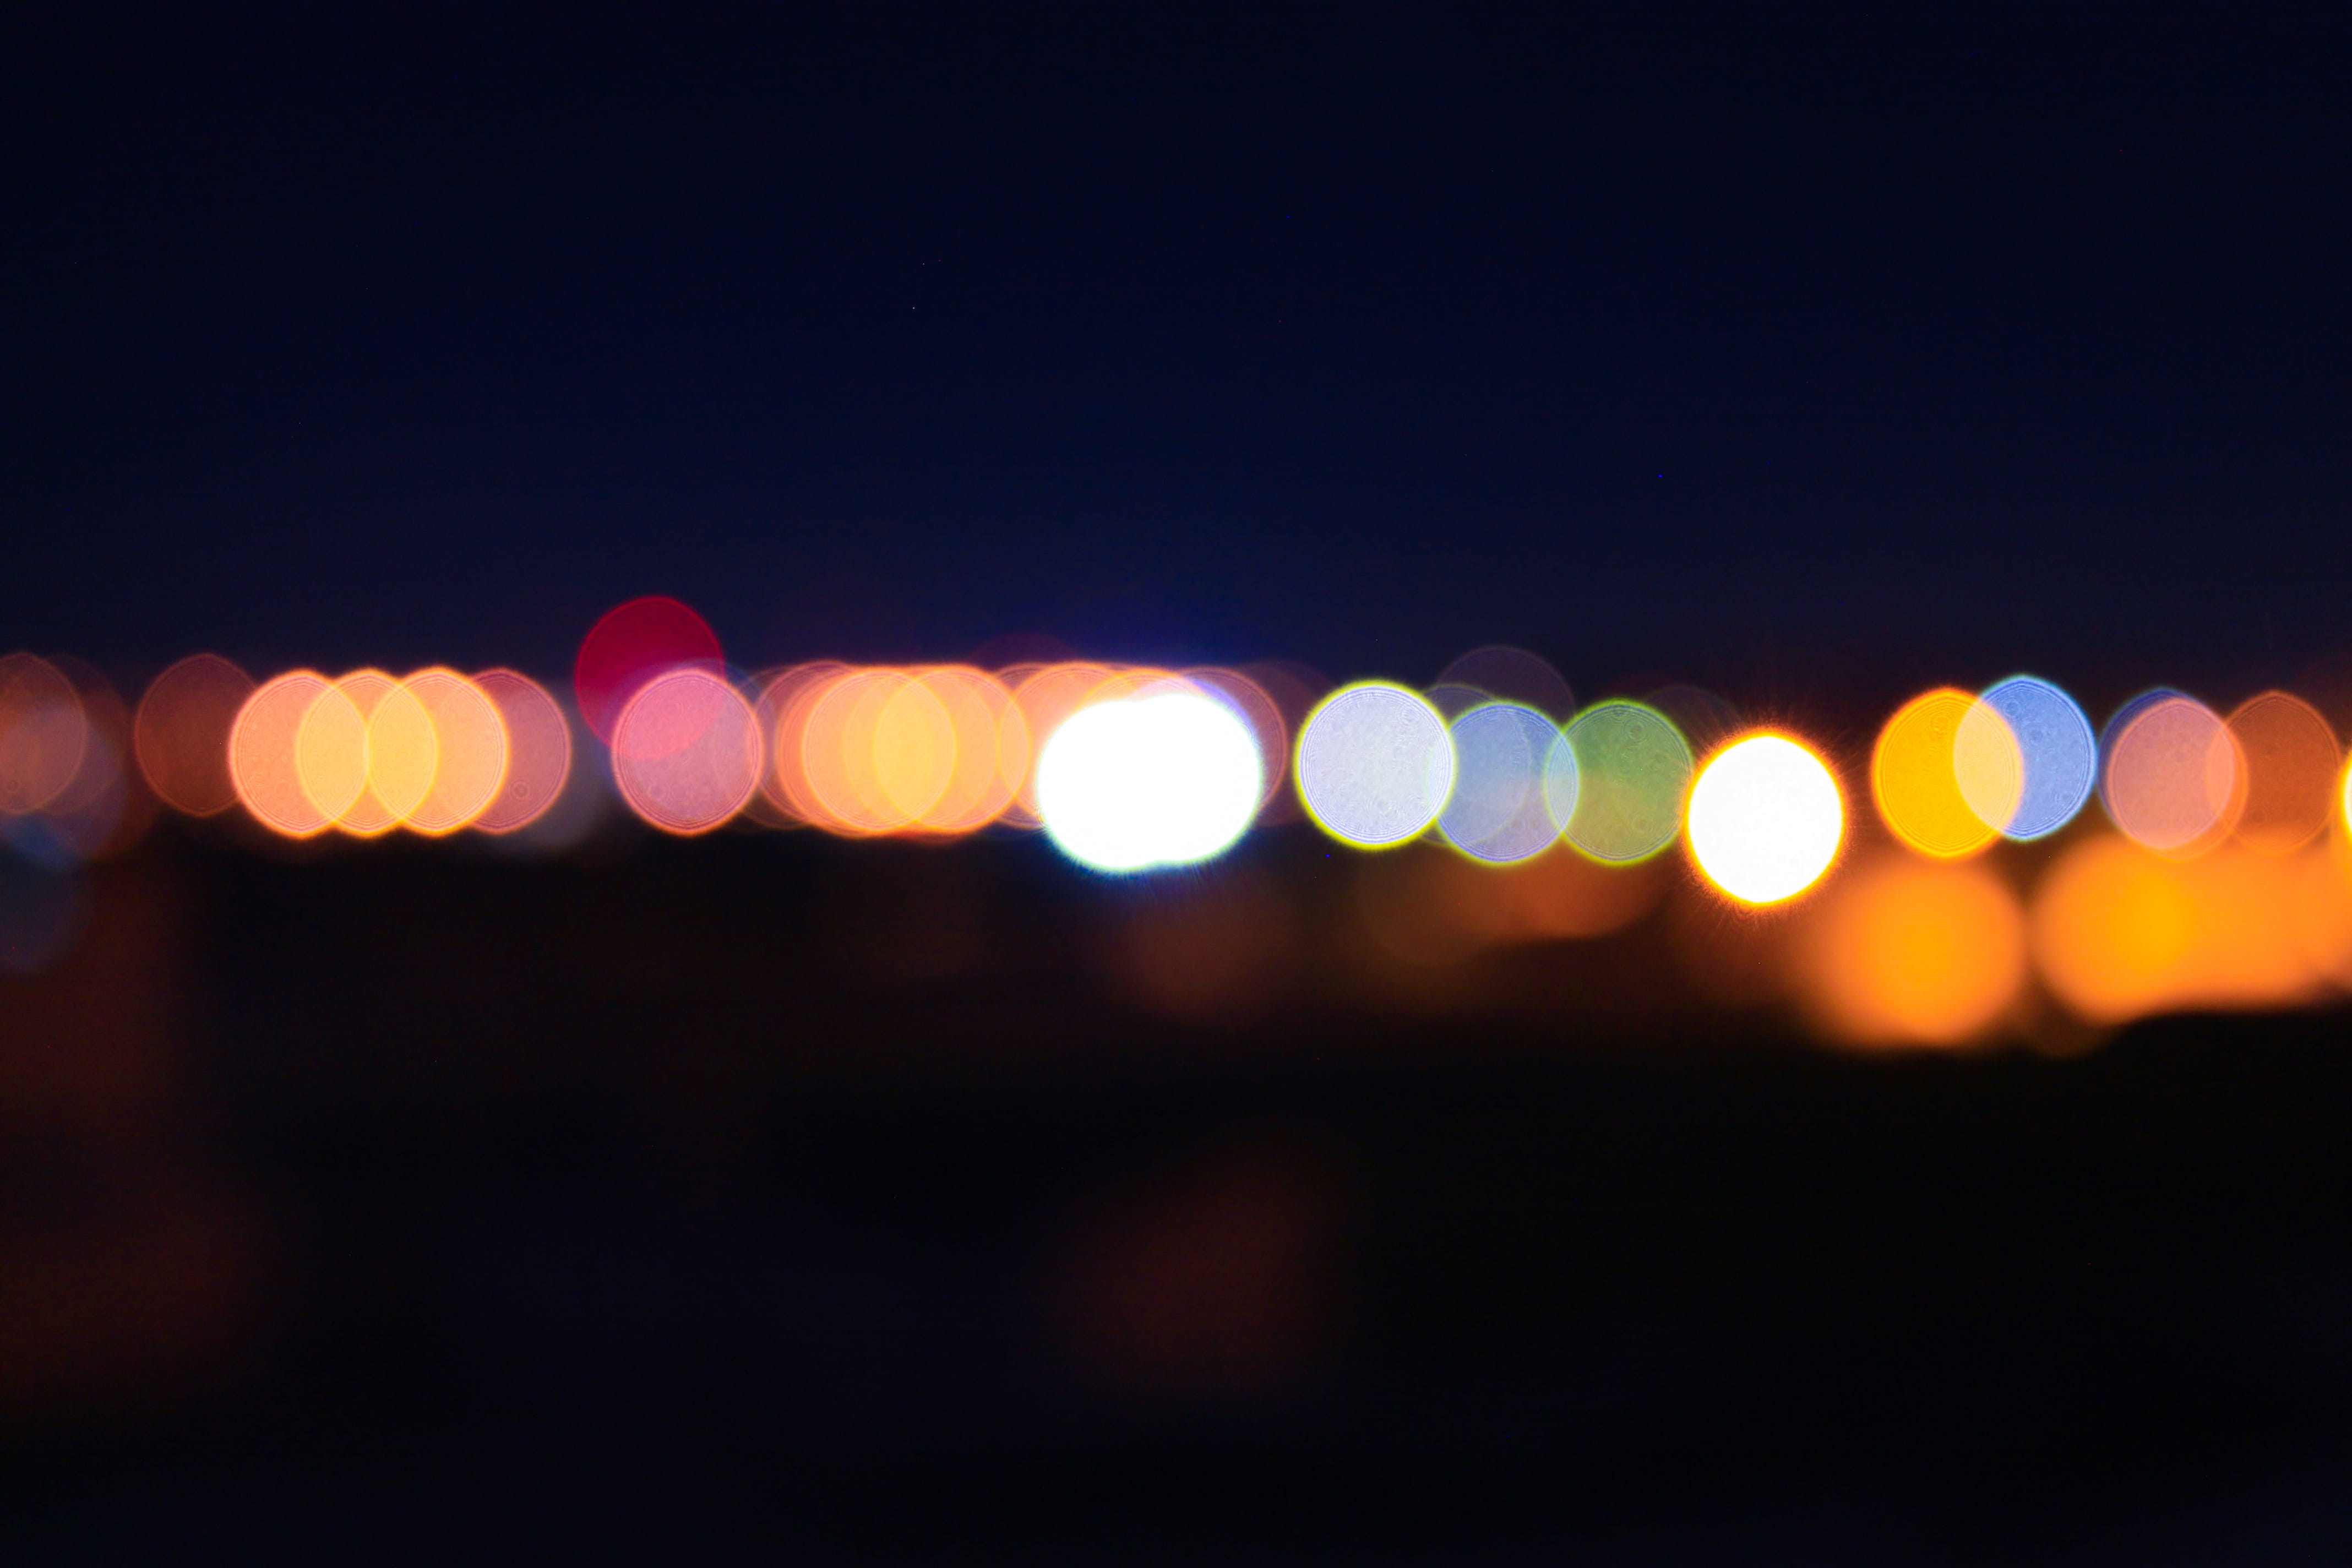 blurred, lights, blurry, effect, night, background, illuminated